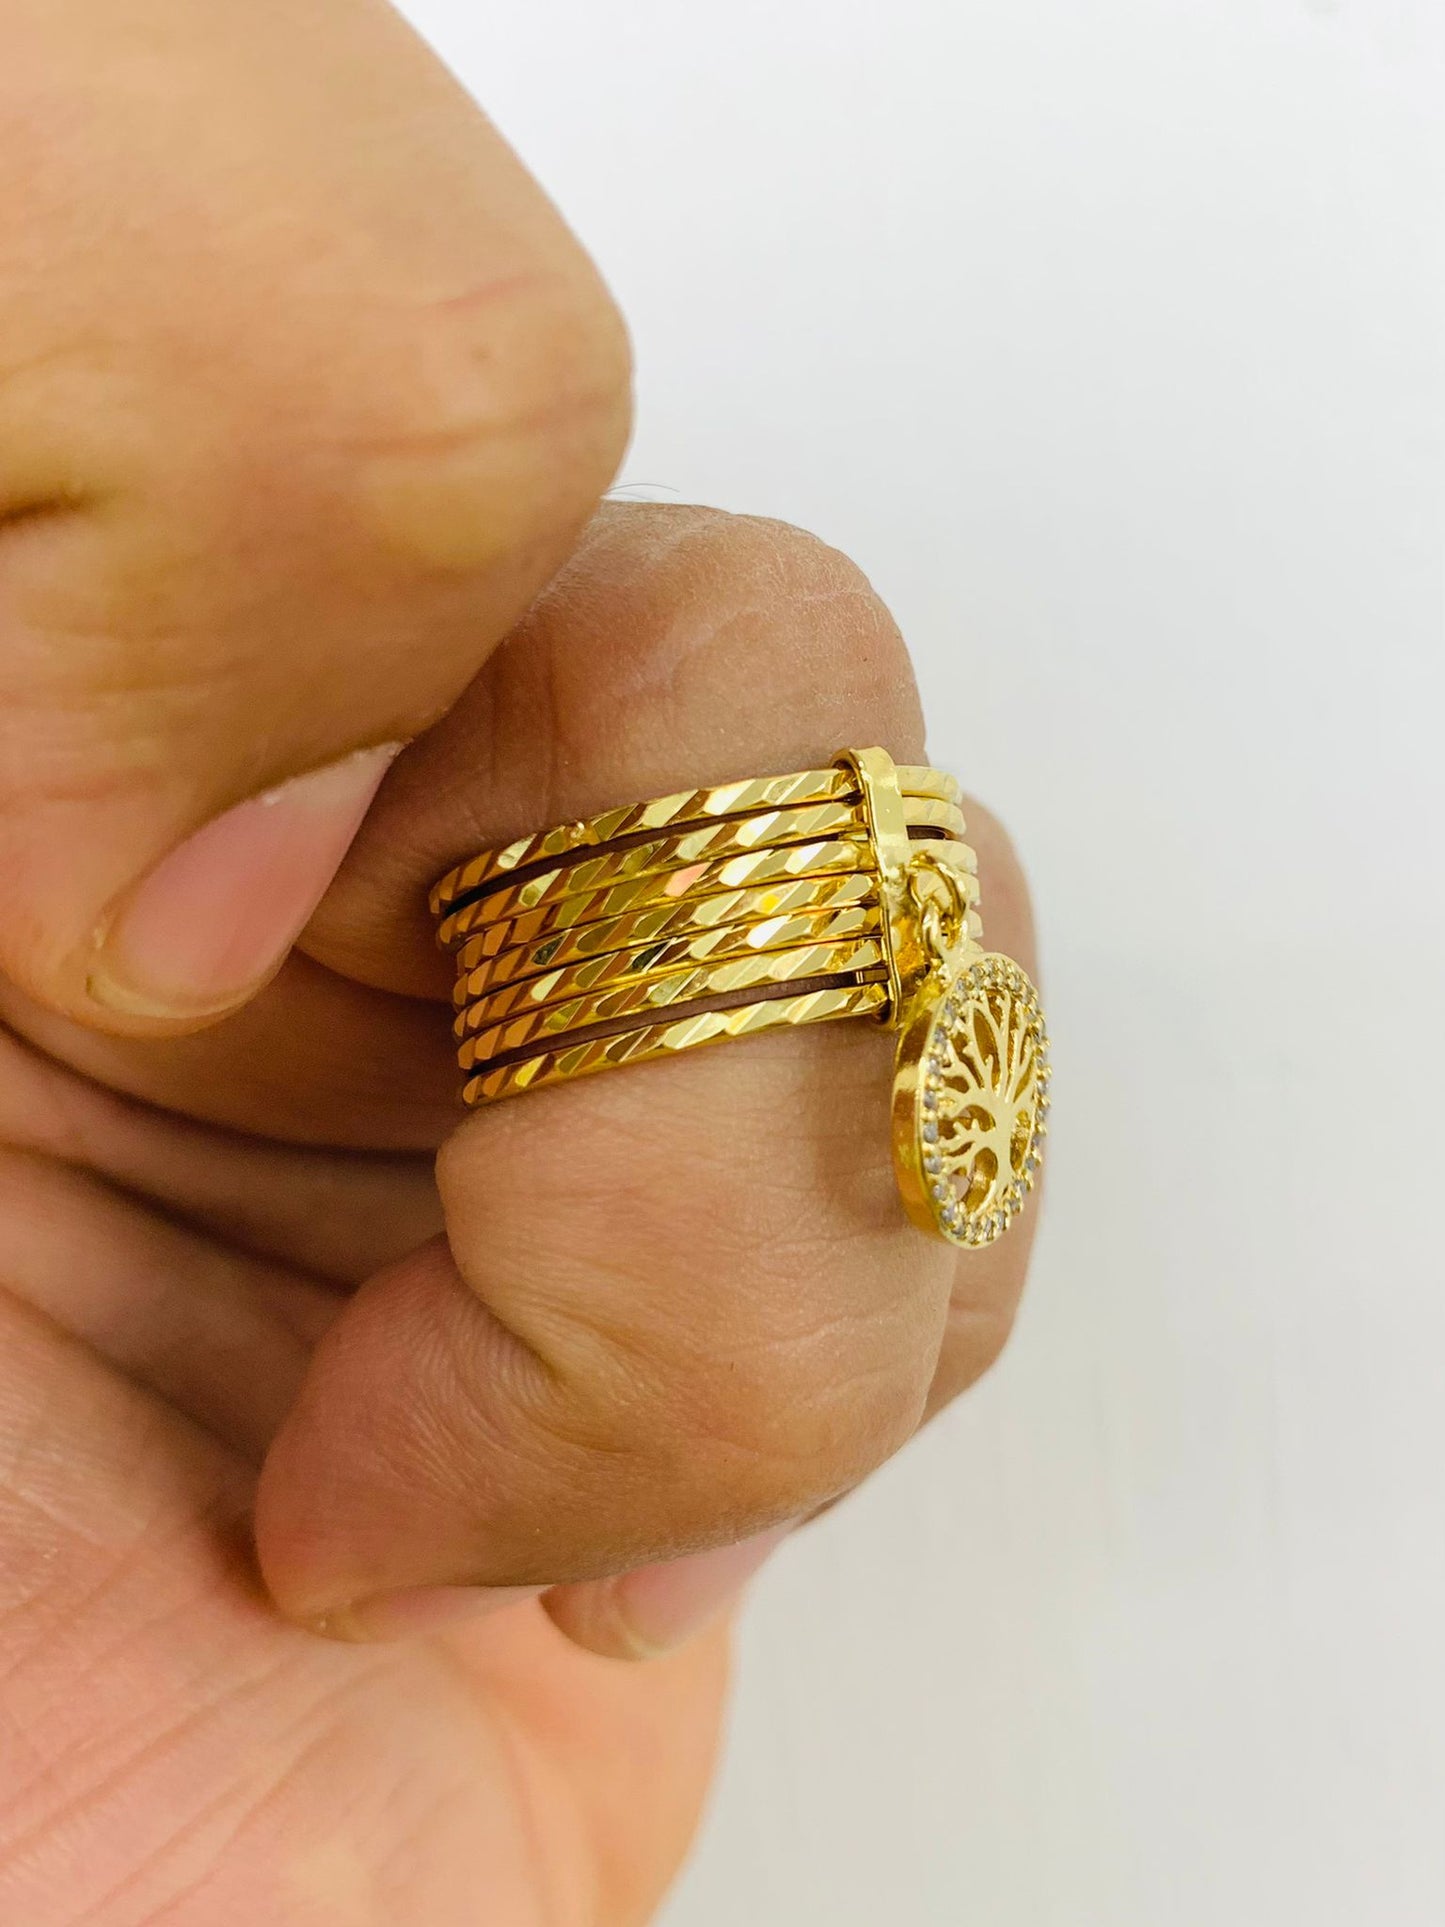 Tree of Life Ring Jewelr Ring for Womens in Gold Filled #7 #8 #9 #10 / Anillo Semanario Árbol de la Vida para Mujer / Tree Of Life Semanario Ring